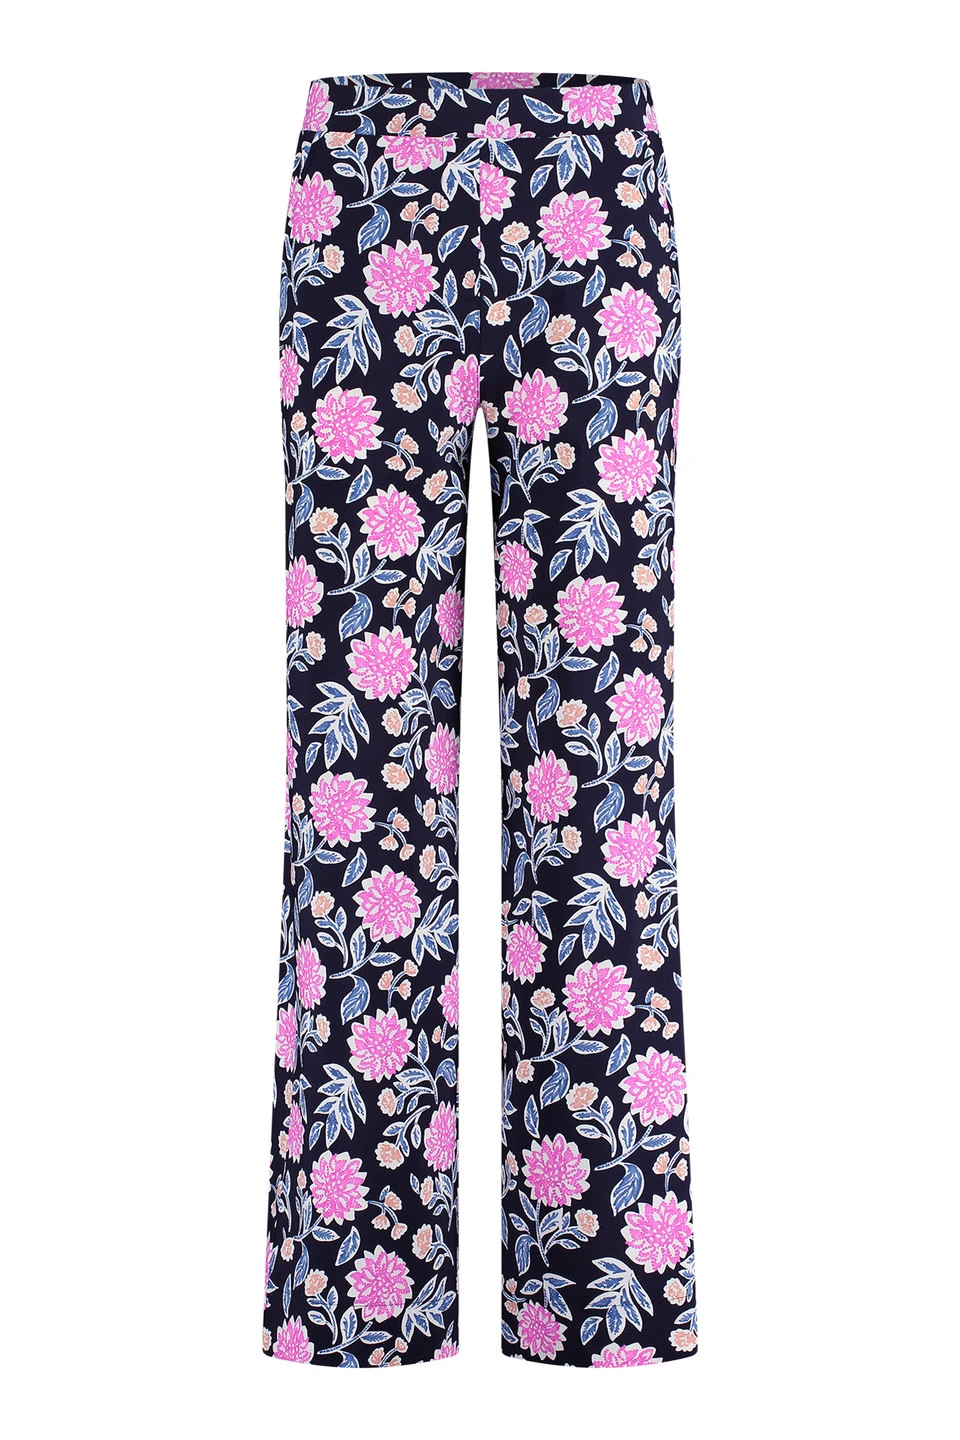 Studio Anneloes | Lexie flower trousers